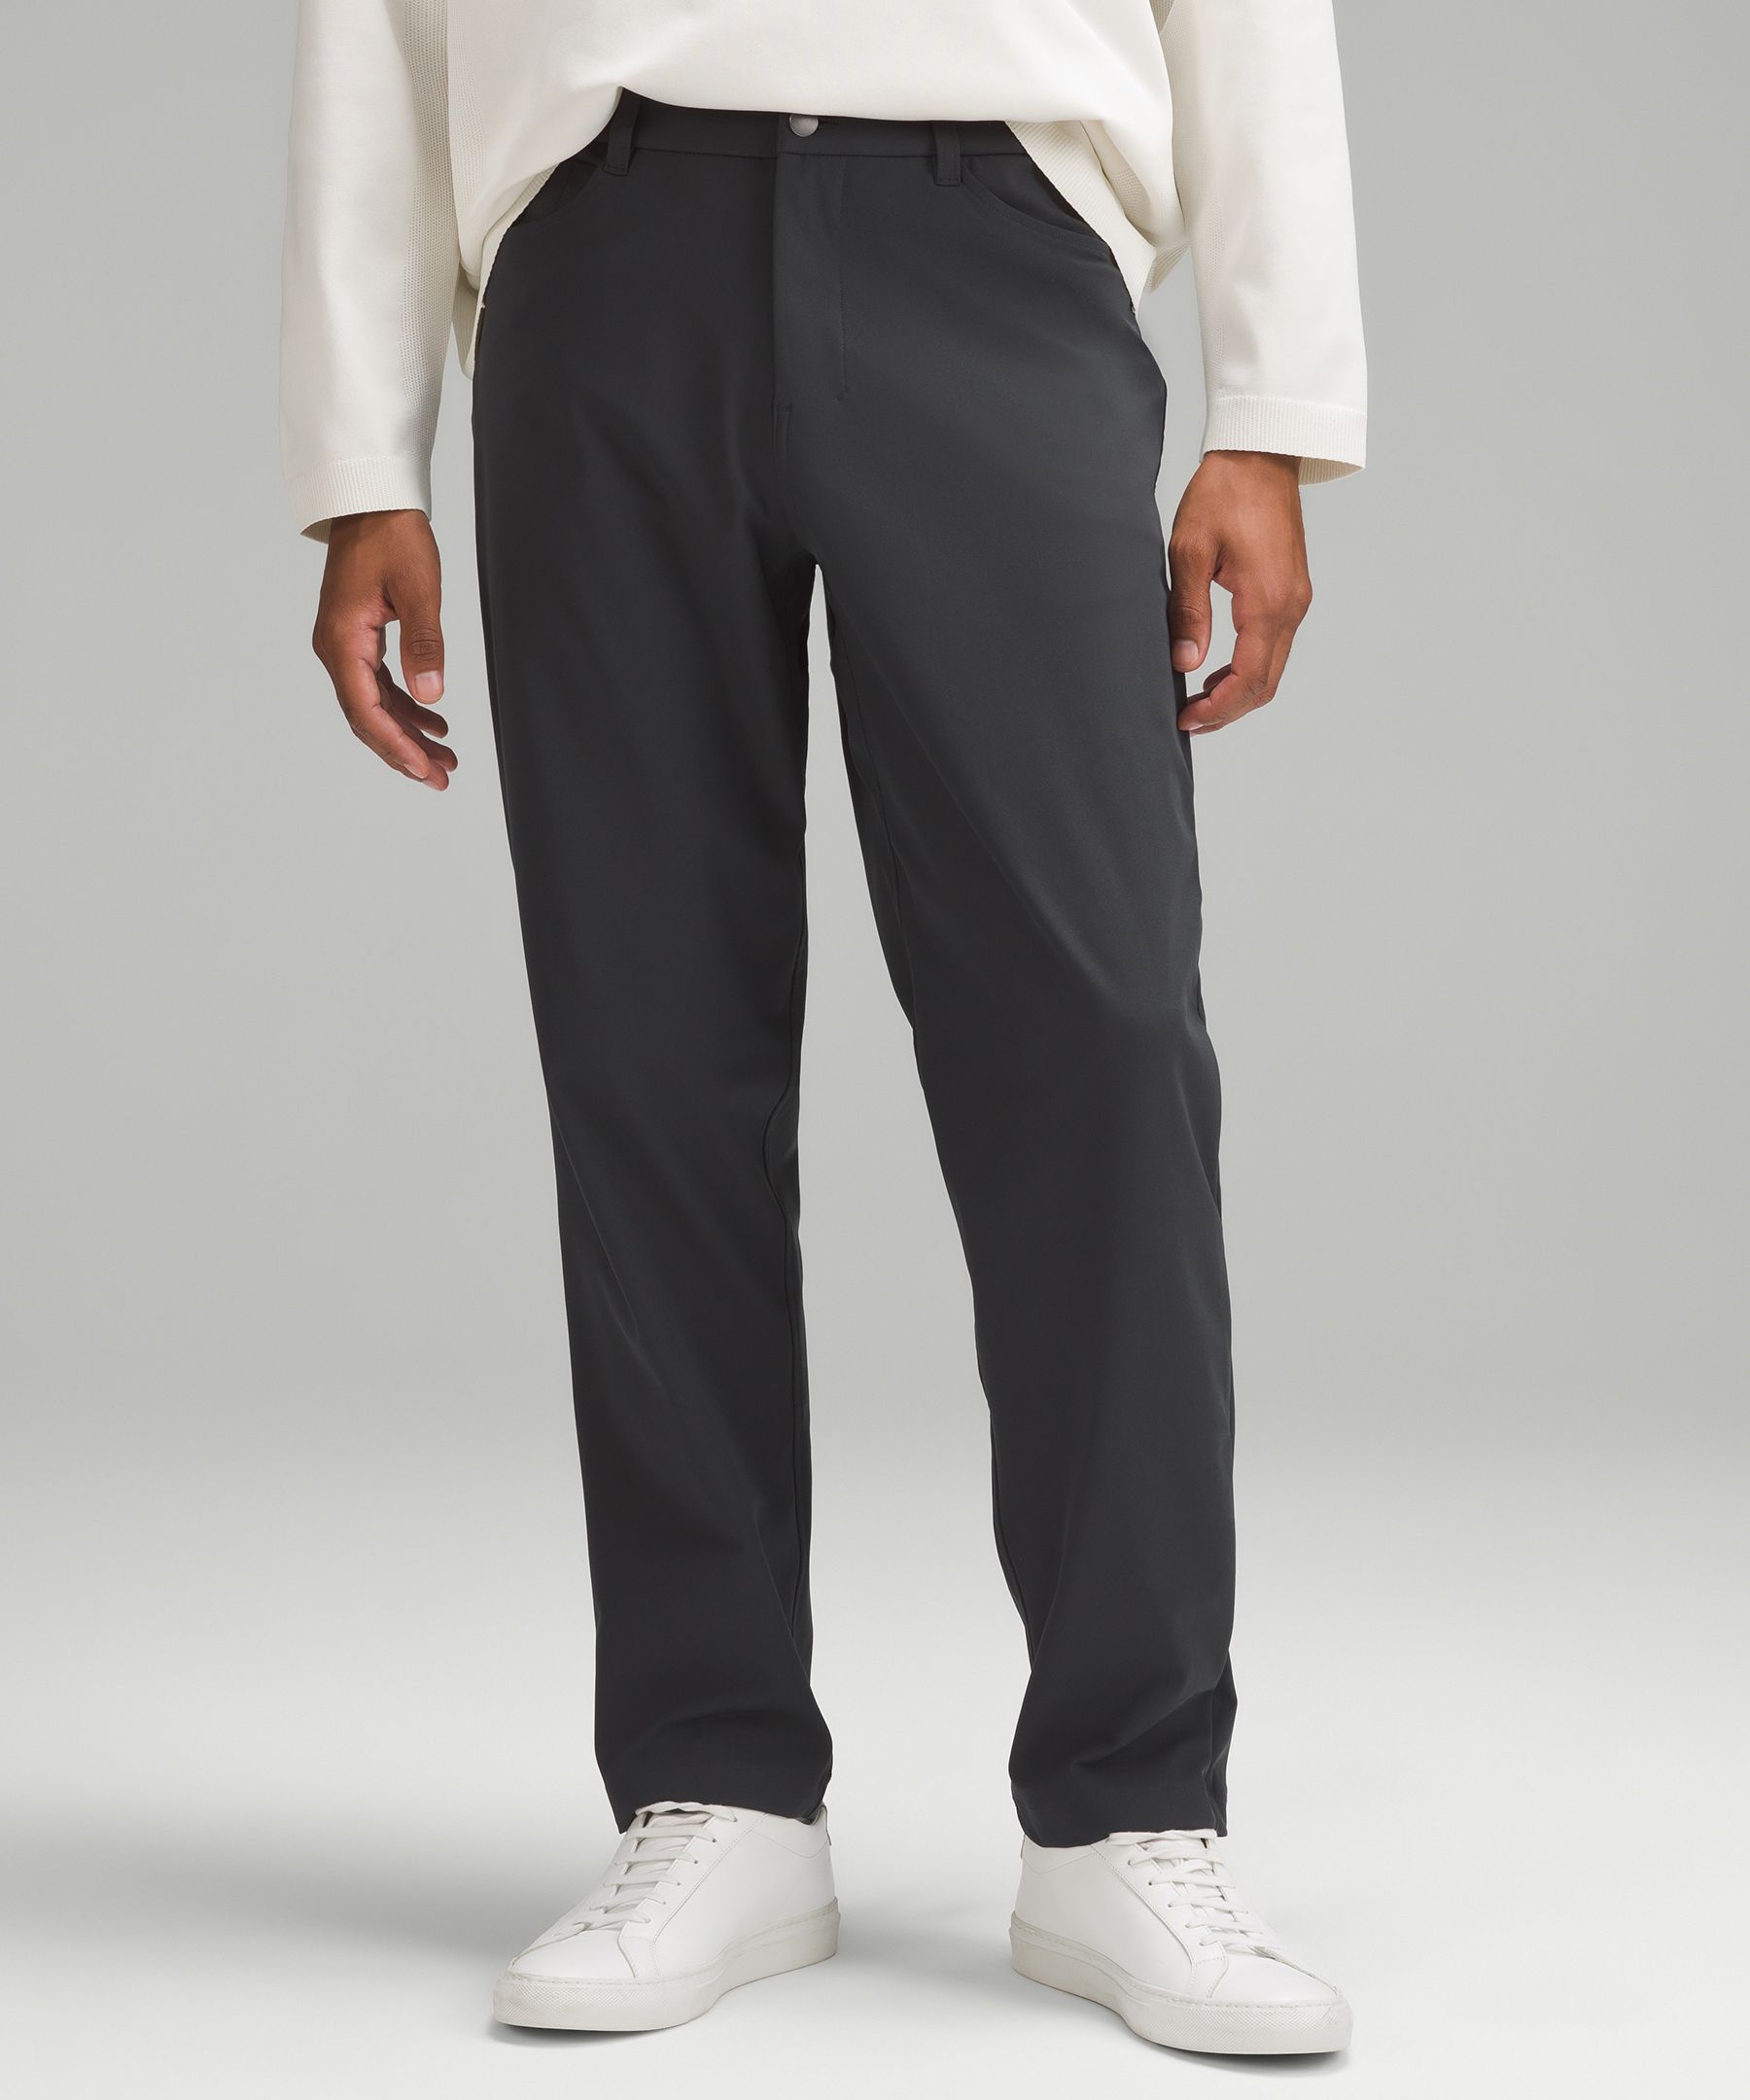 ABC Relaxed-Fit 5 Pocket Pant 30L *Warpstreme, Men's Trousers